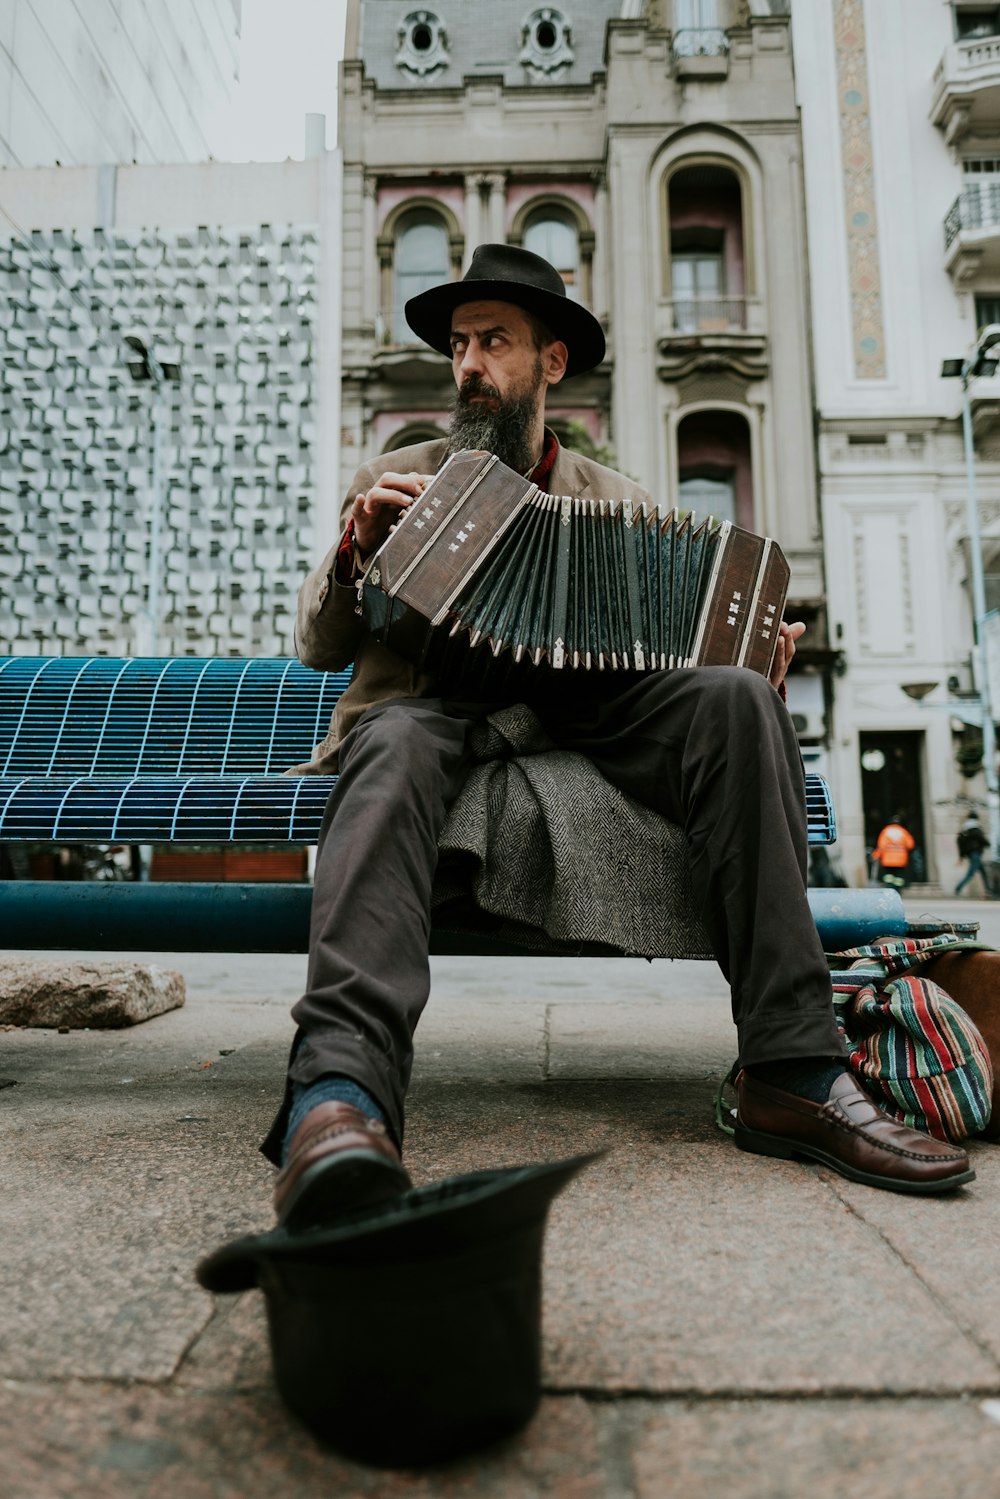 man sitting on bench playing accordion